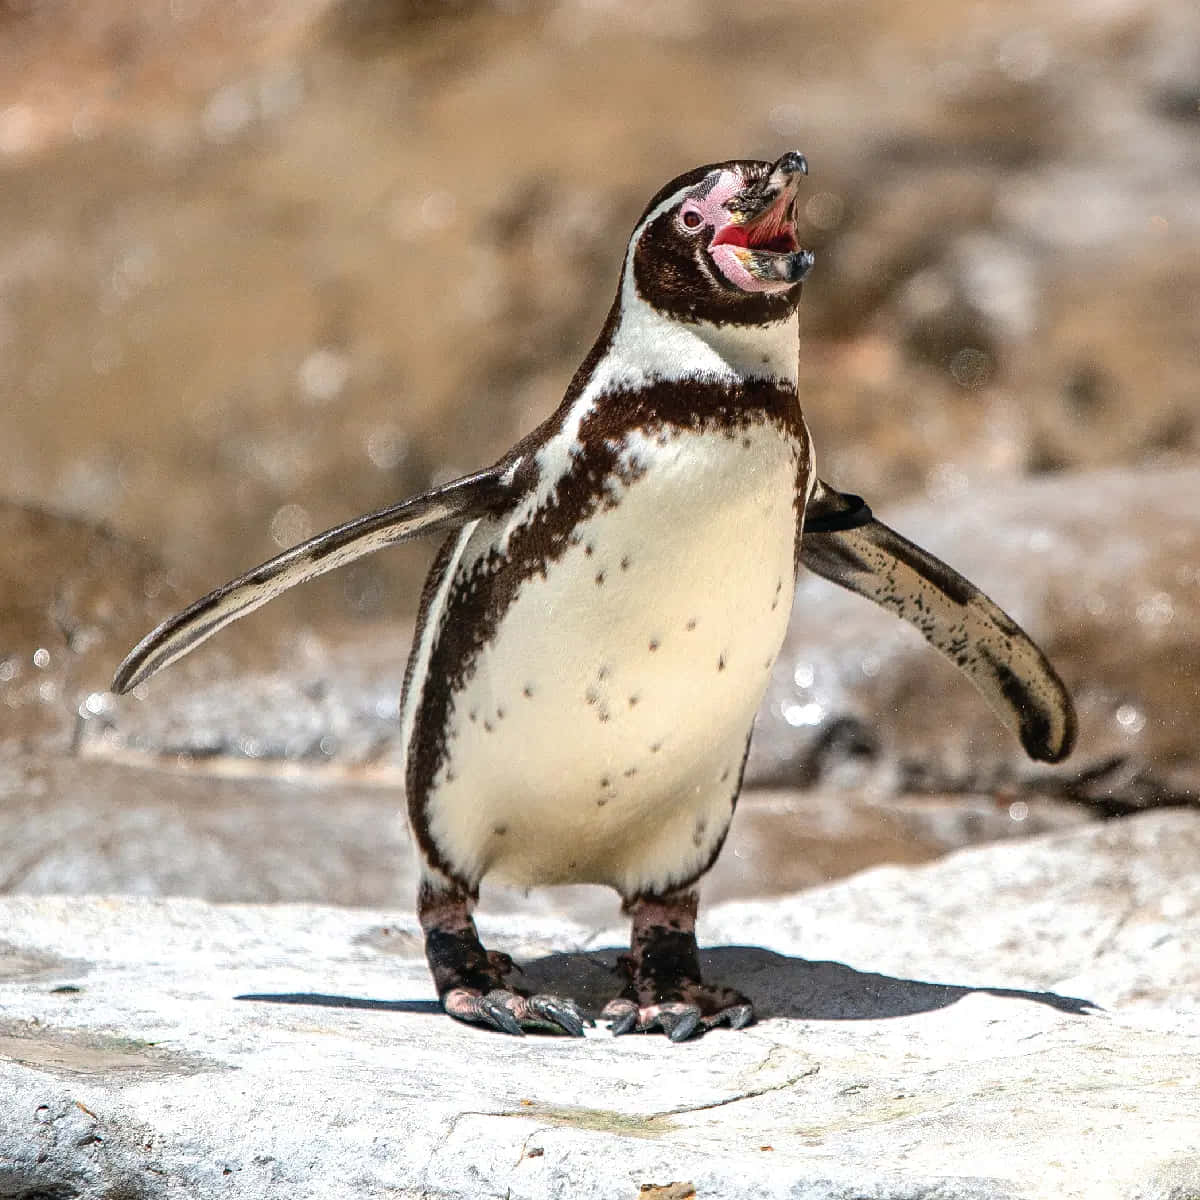 Adorable Dressed Up Penguin